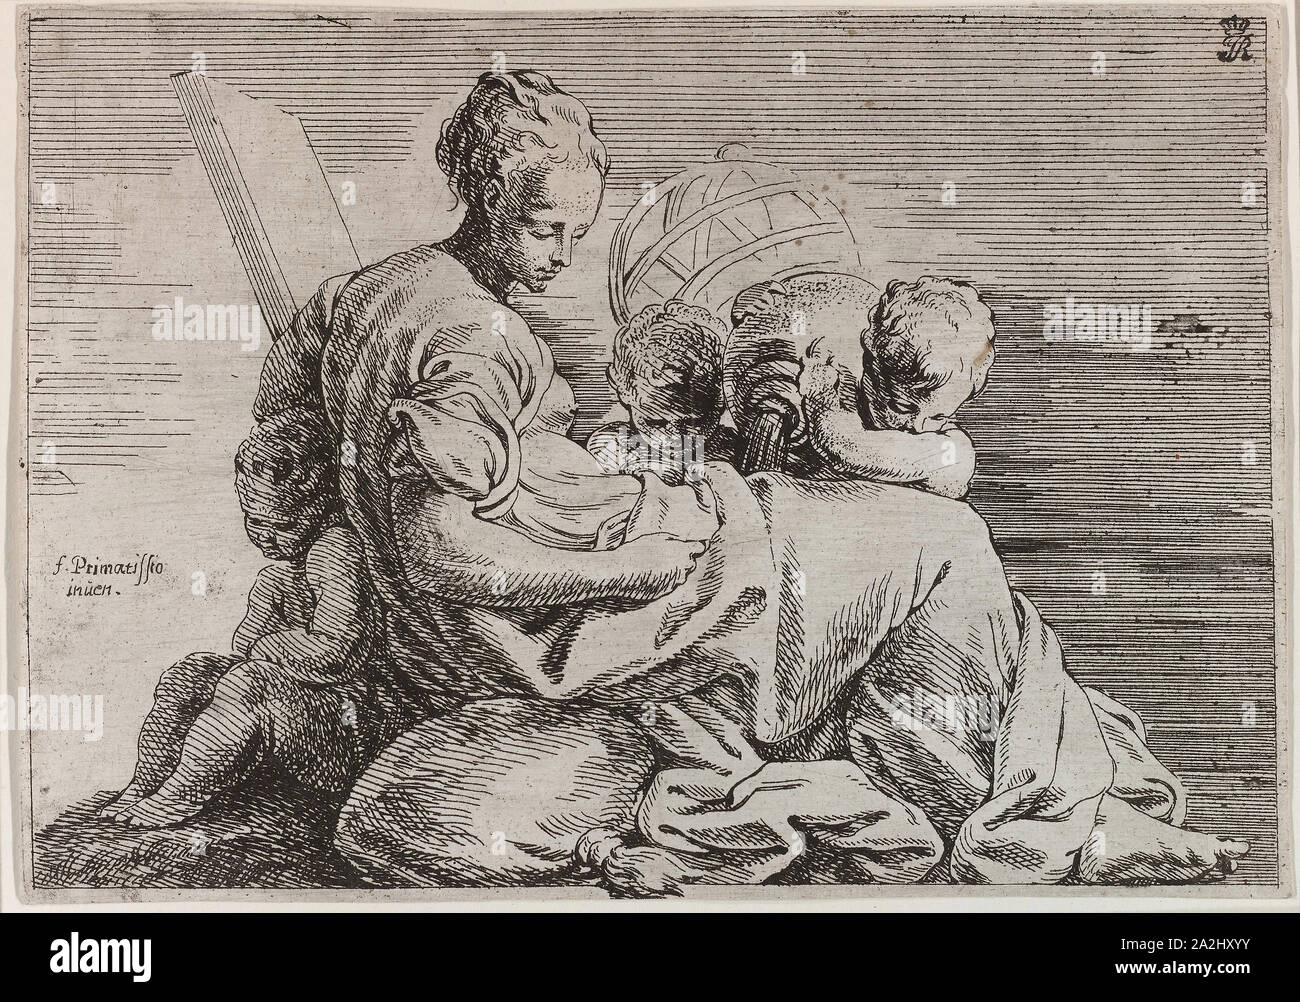 Astronomy, n.d., Eloi Bonnejonne (Italian, c. 1630-1695), after Francesco Primaticcio (Italian, 1504-1570), Italy, Etching printed in black on paper, 138 x 198 mm Stock Photo